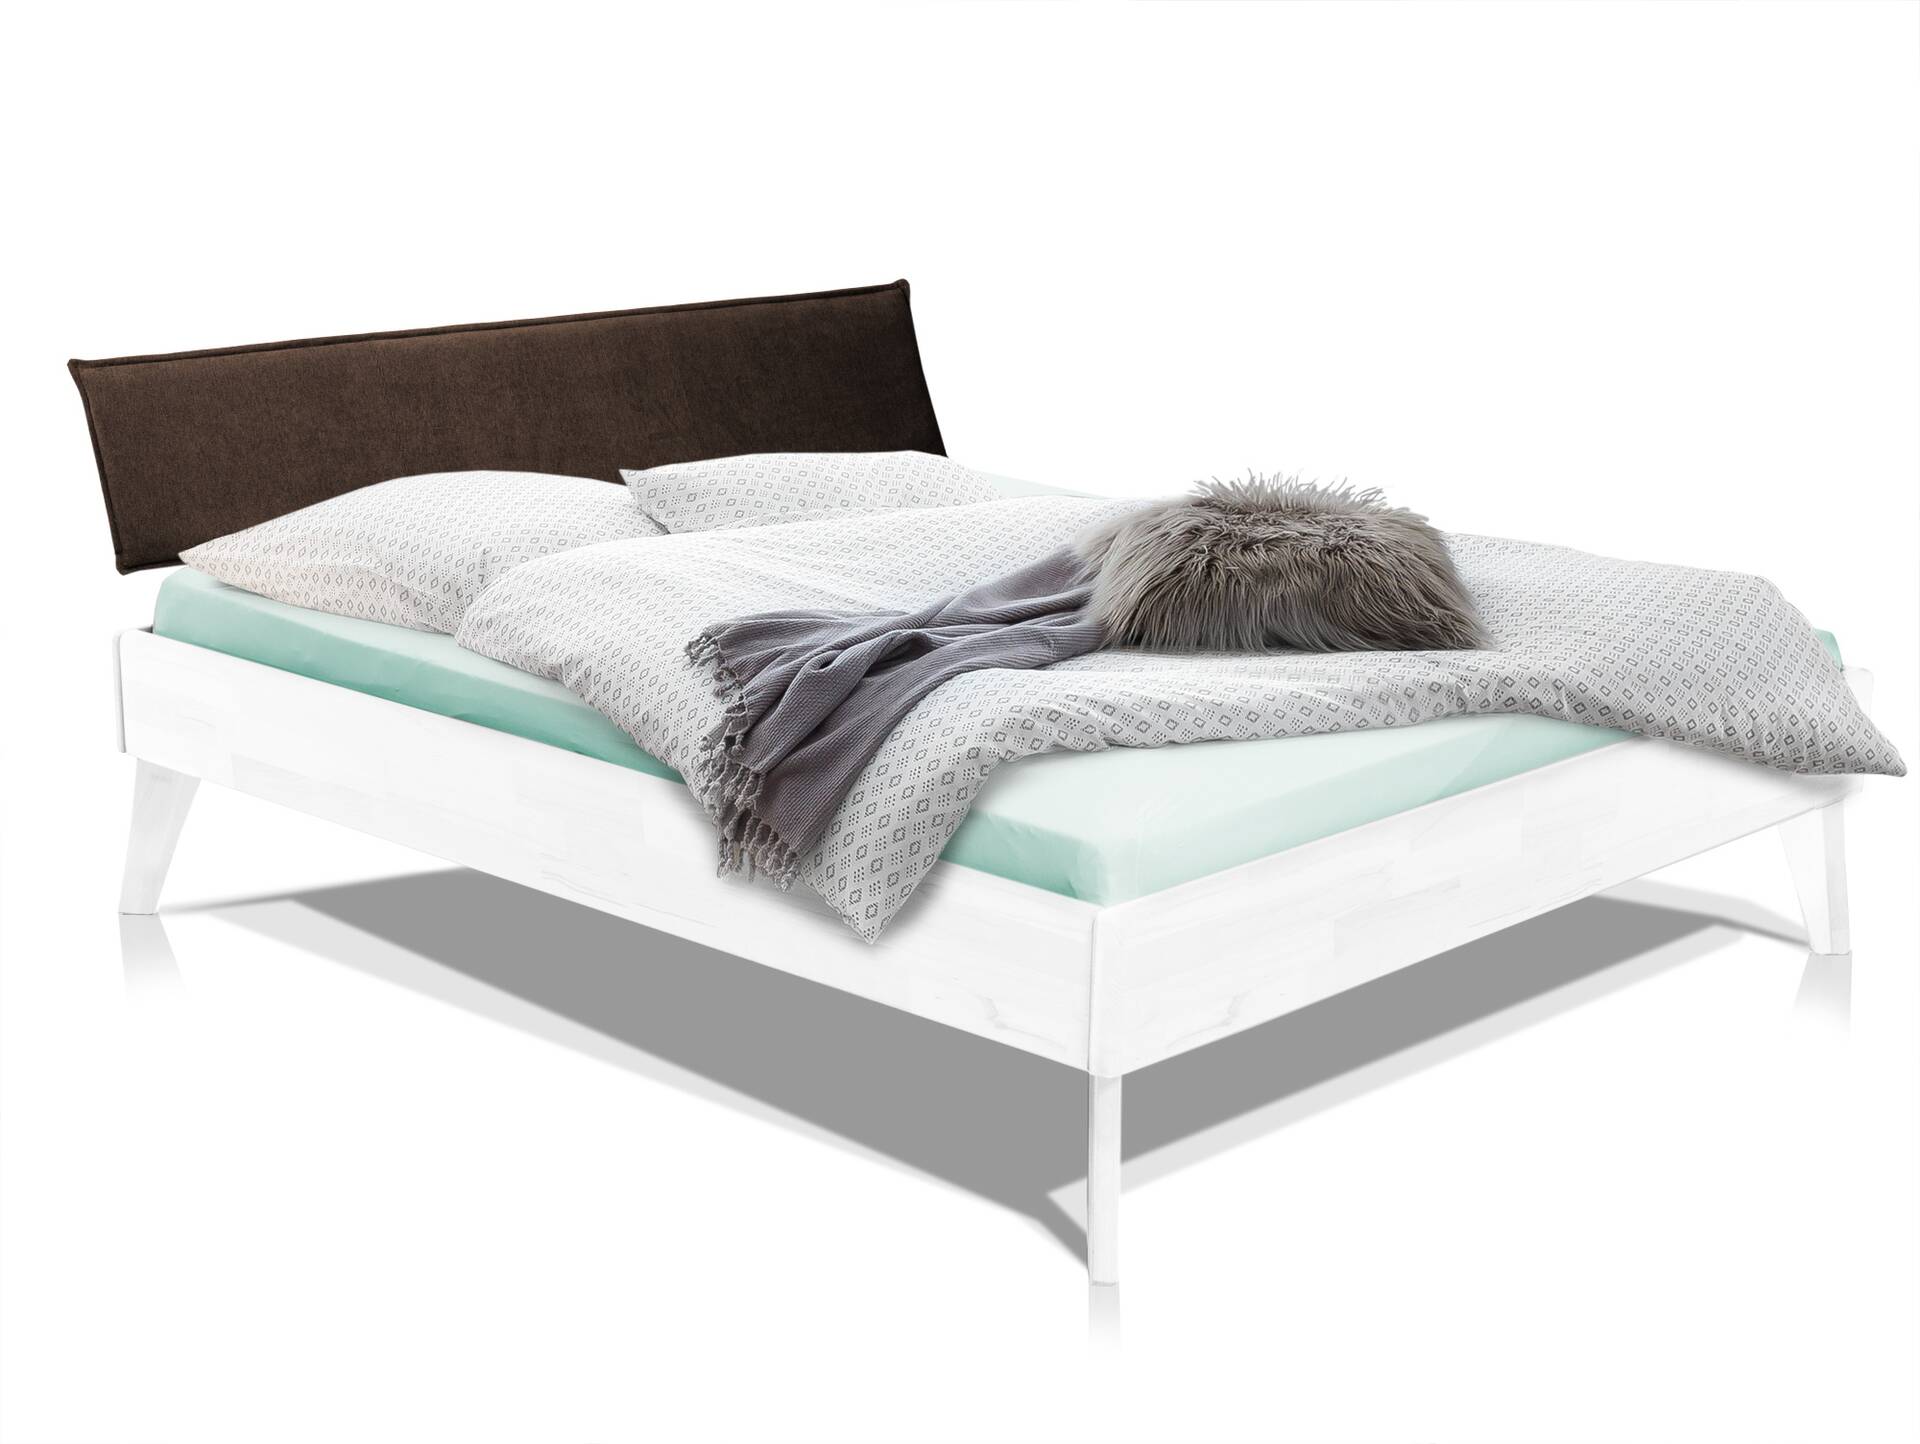 CALIDO 4-Fuß-Bett mit Polster-Kopfteil, Material Massivholz 90 x 220 cm | Buche weiss lackiert | Stoff Braun | Komforthöhe